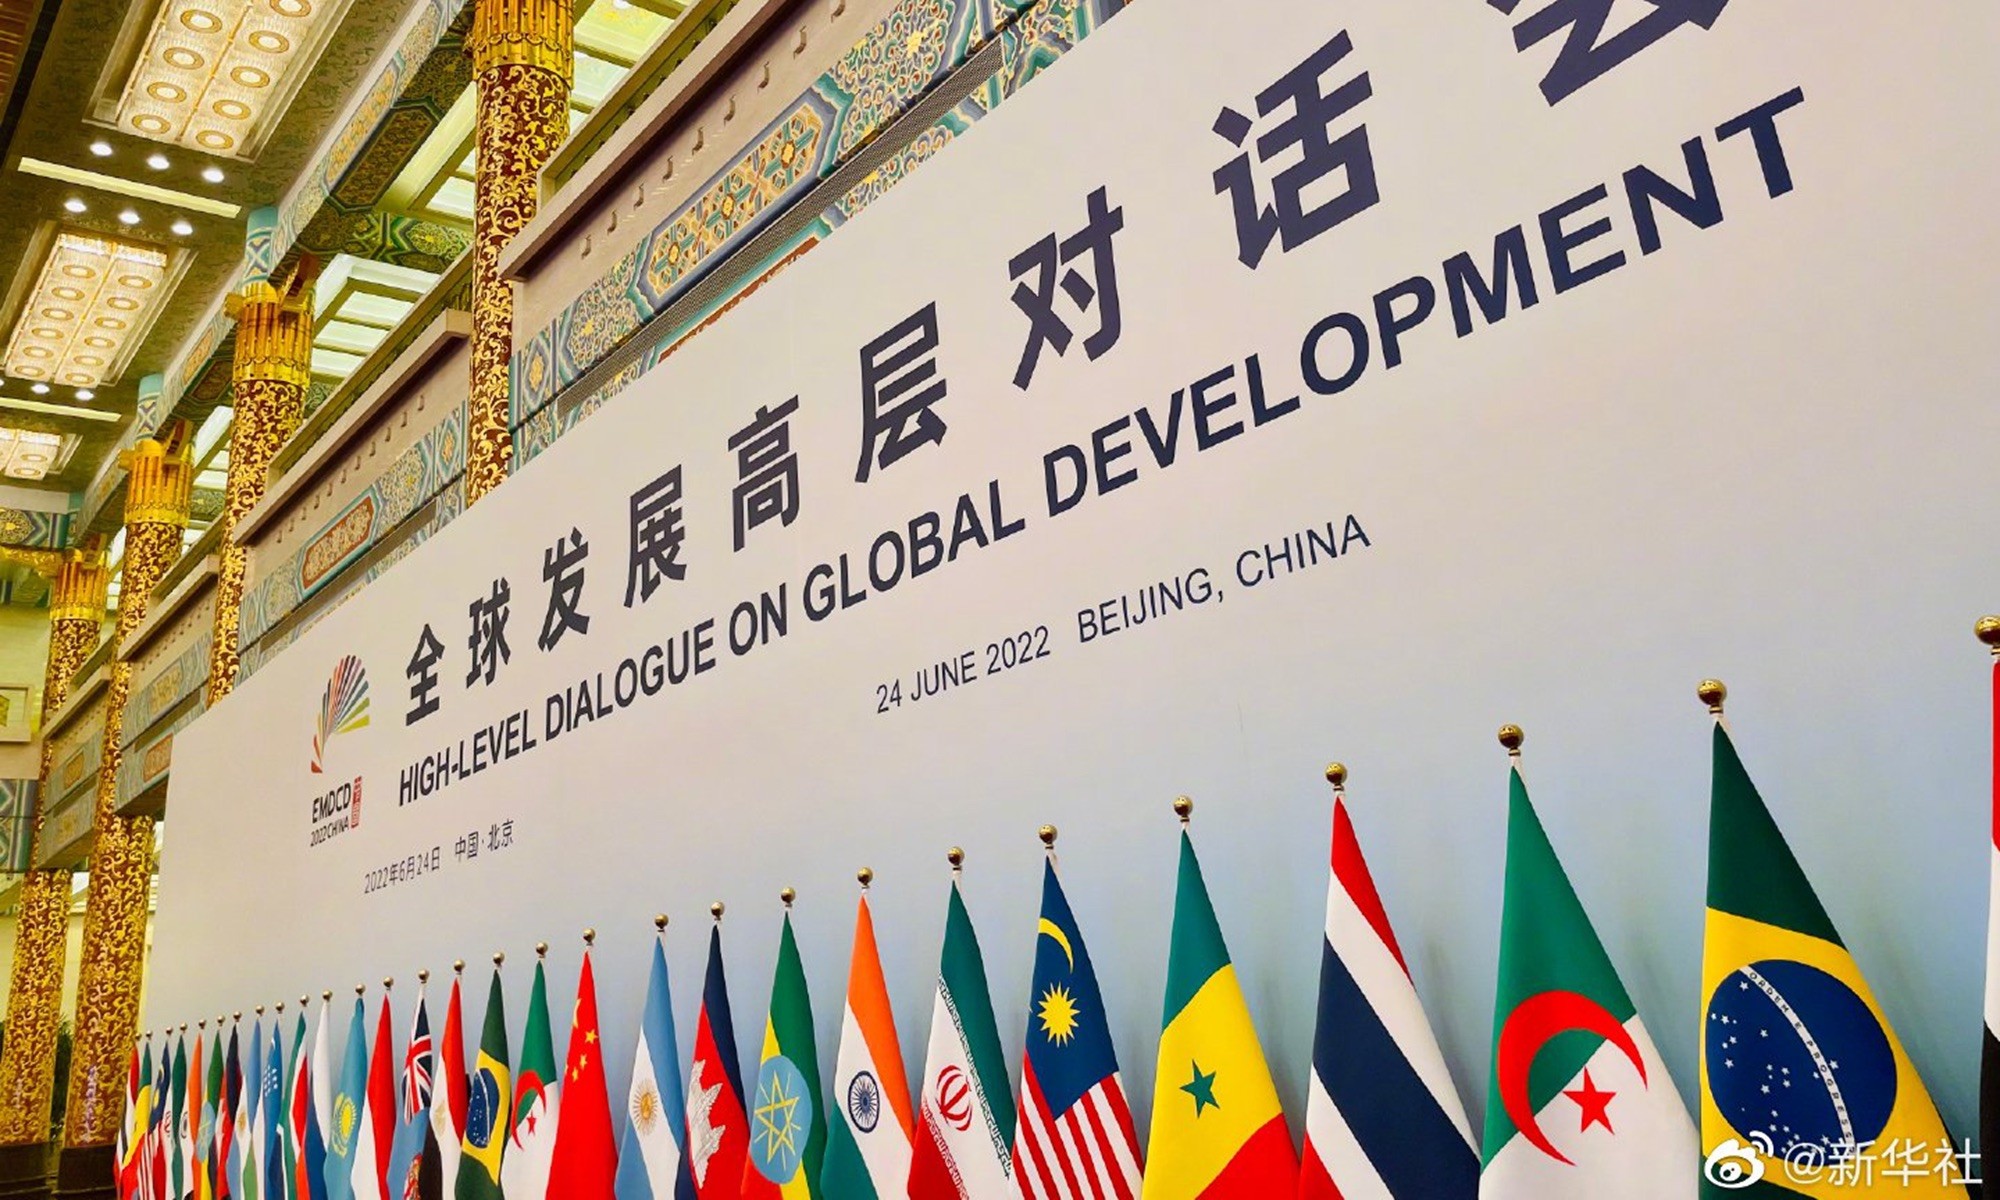 President Xi stresses global development at dialogue following BRICS Summit